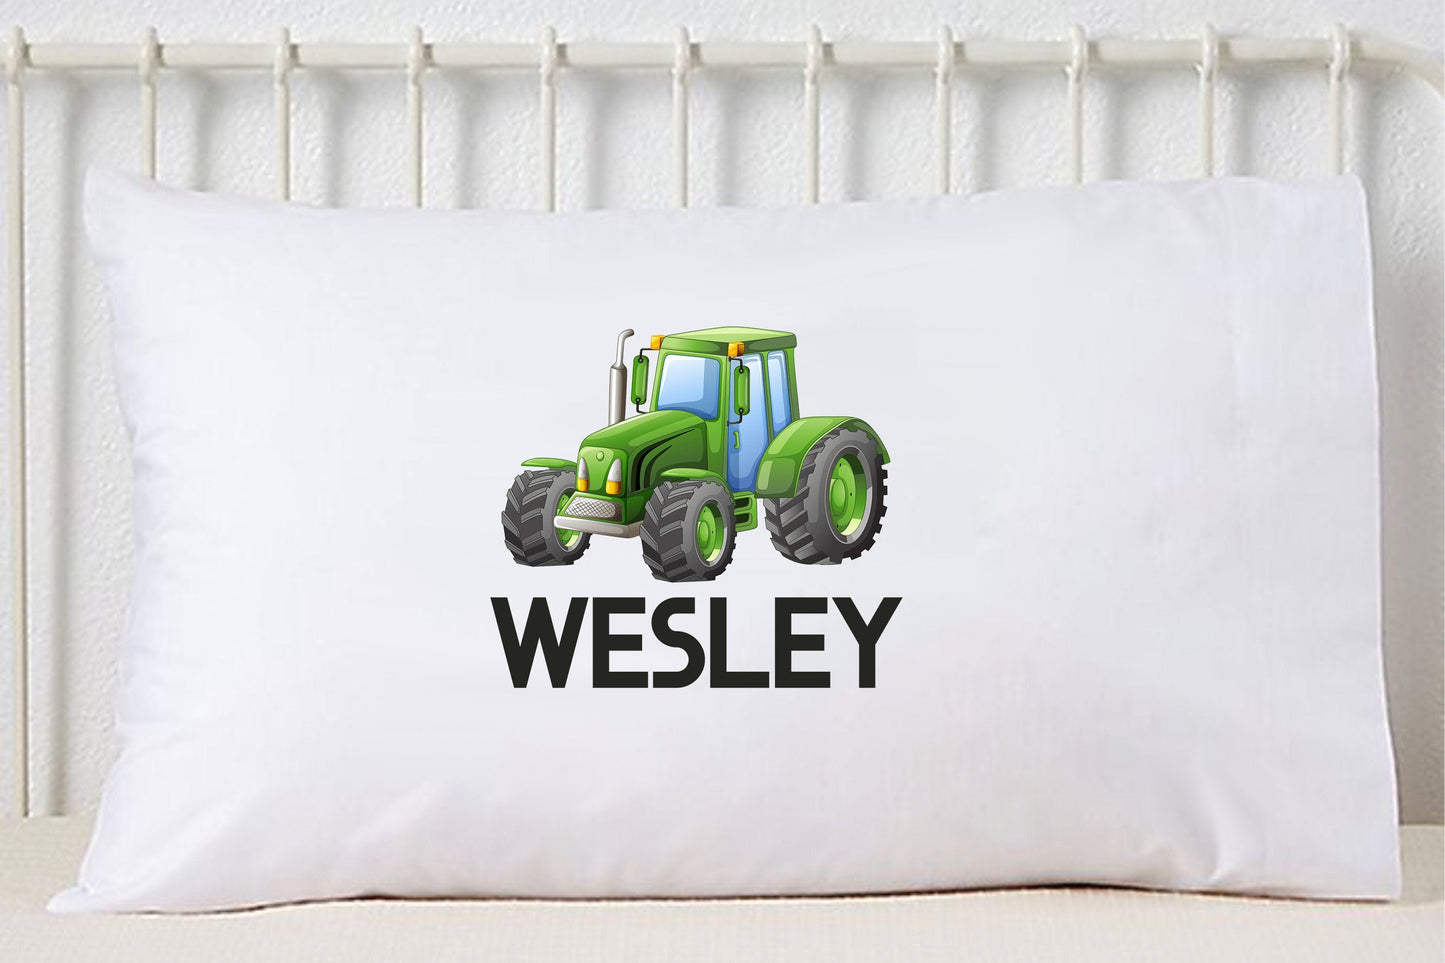 Custom Name Pillowcase, Green Tractor Farm Print Pillowcase, Personalized Pillow Case, Boy Pillowcase, Kids Room Decor, Standard Size Pillow